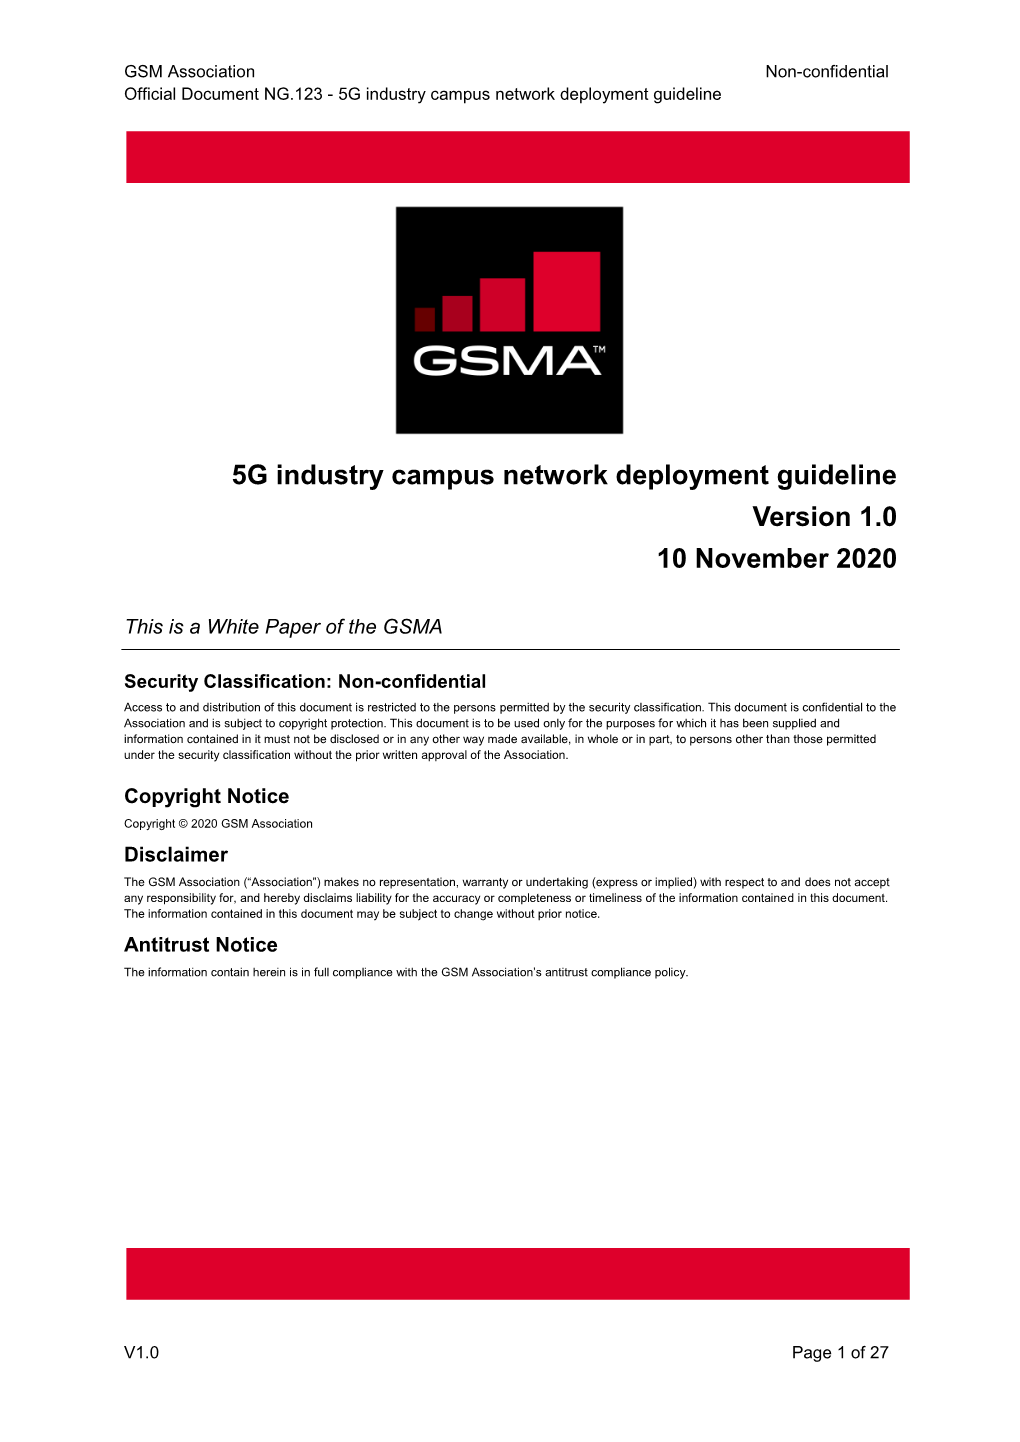 5G Industry Campus Network Deployment Guideline Version 1.0 10 November 2020